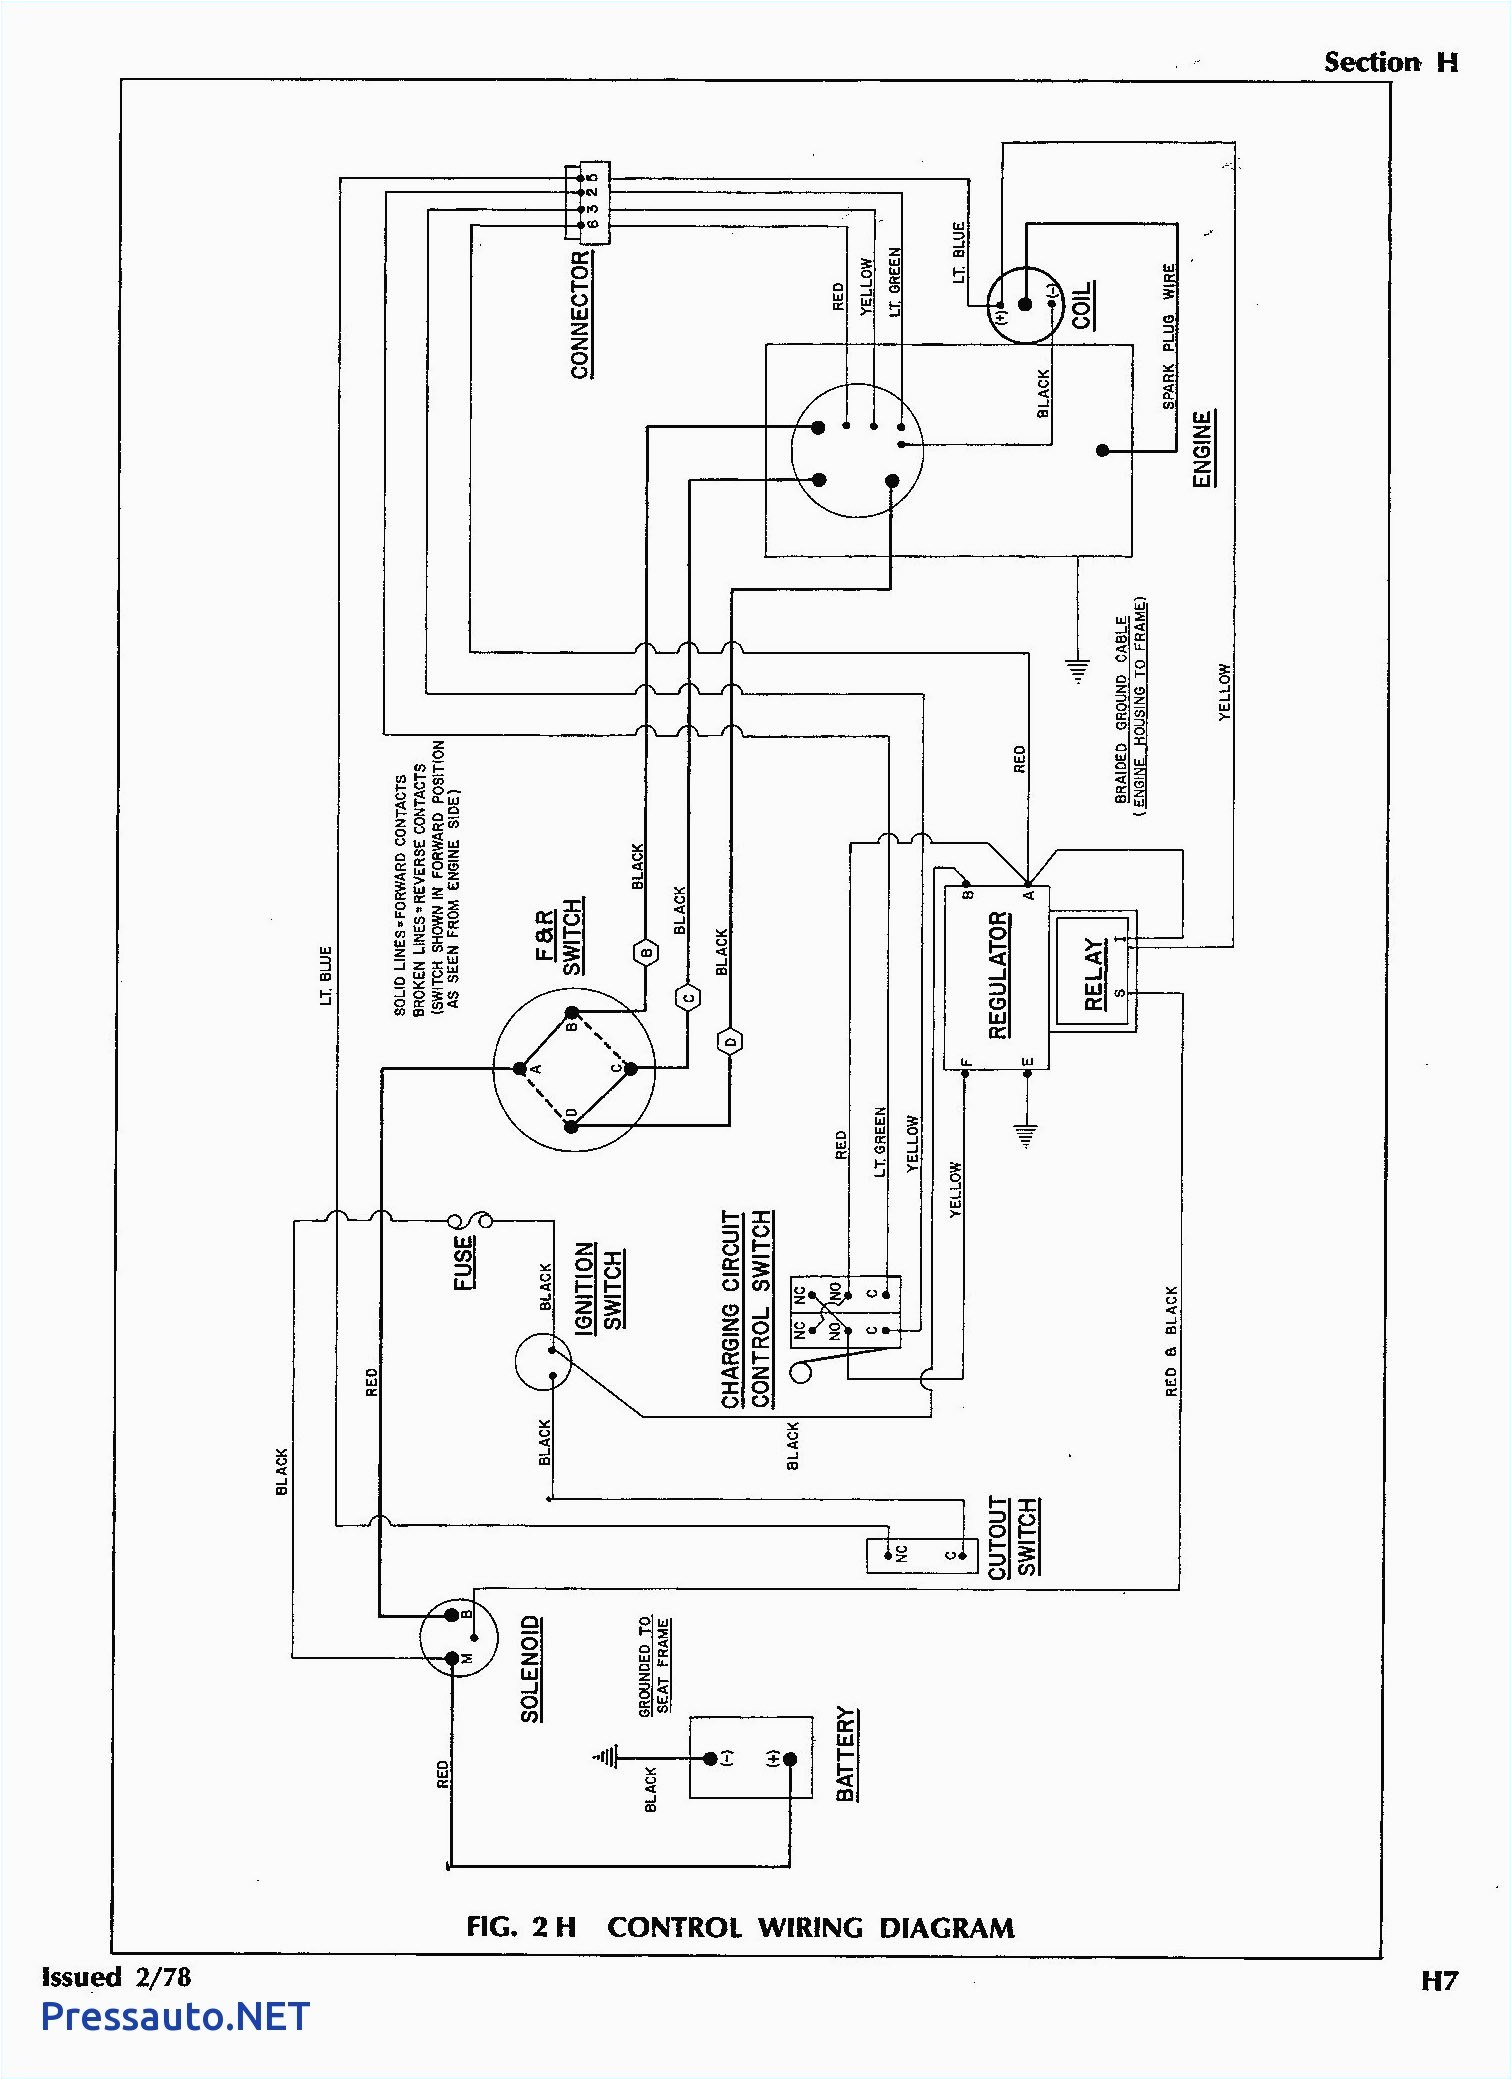 alfa img showing ezgo gas workhorse wiring diagram pressauto net throughout 1987 ez go golf cart on 1987 ez go golf cart wiring diagram jpg